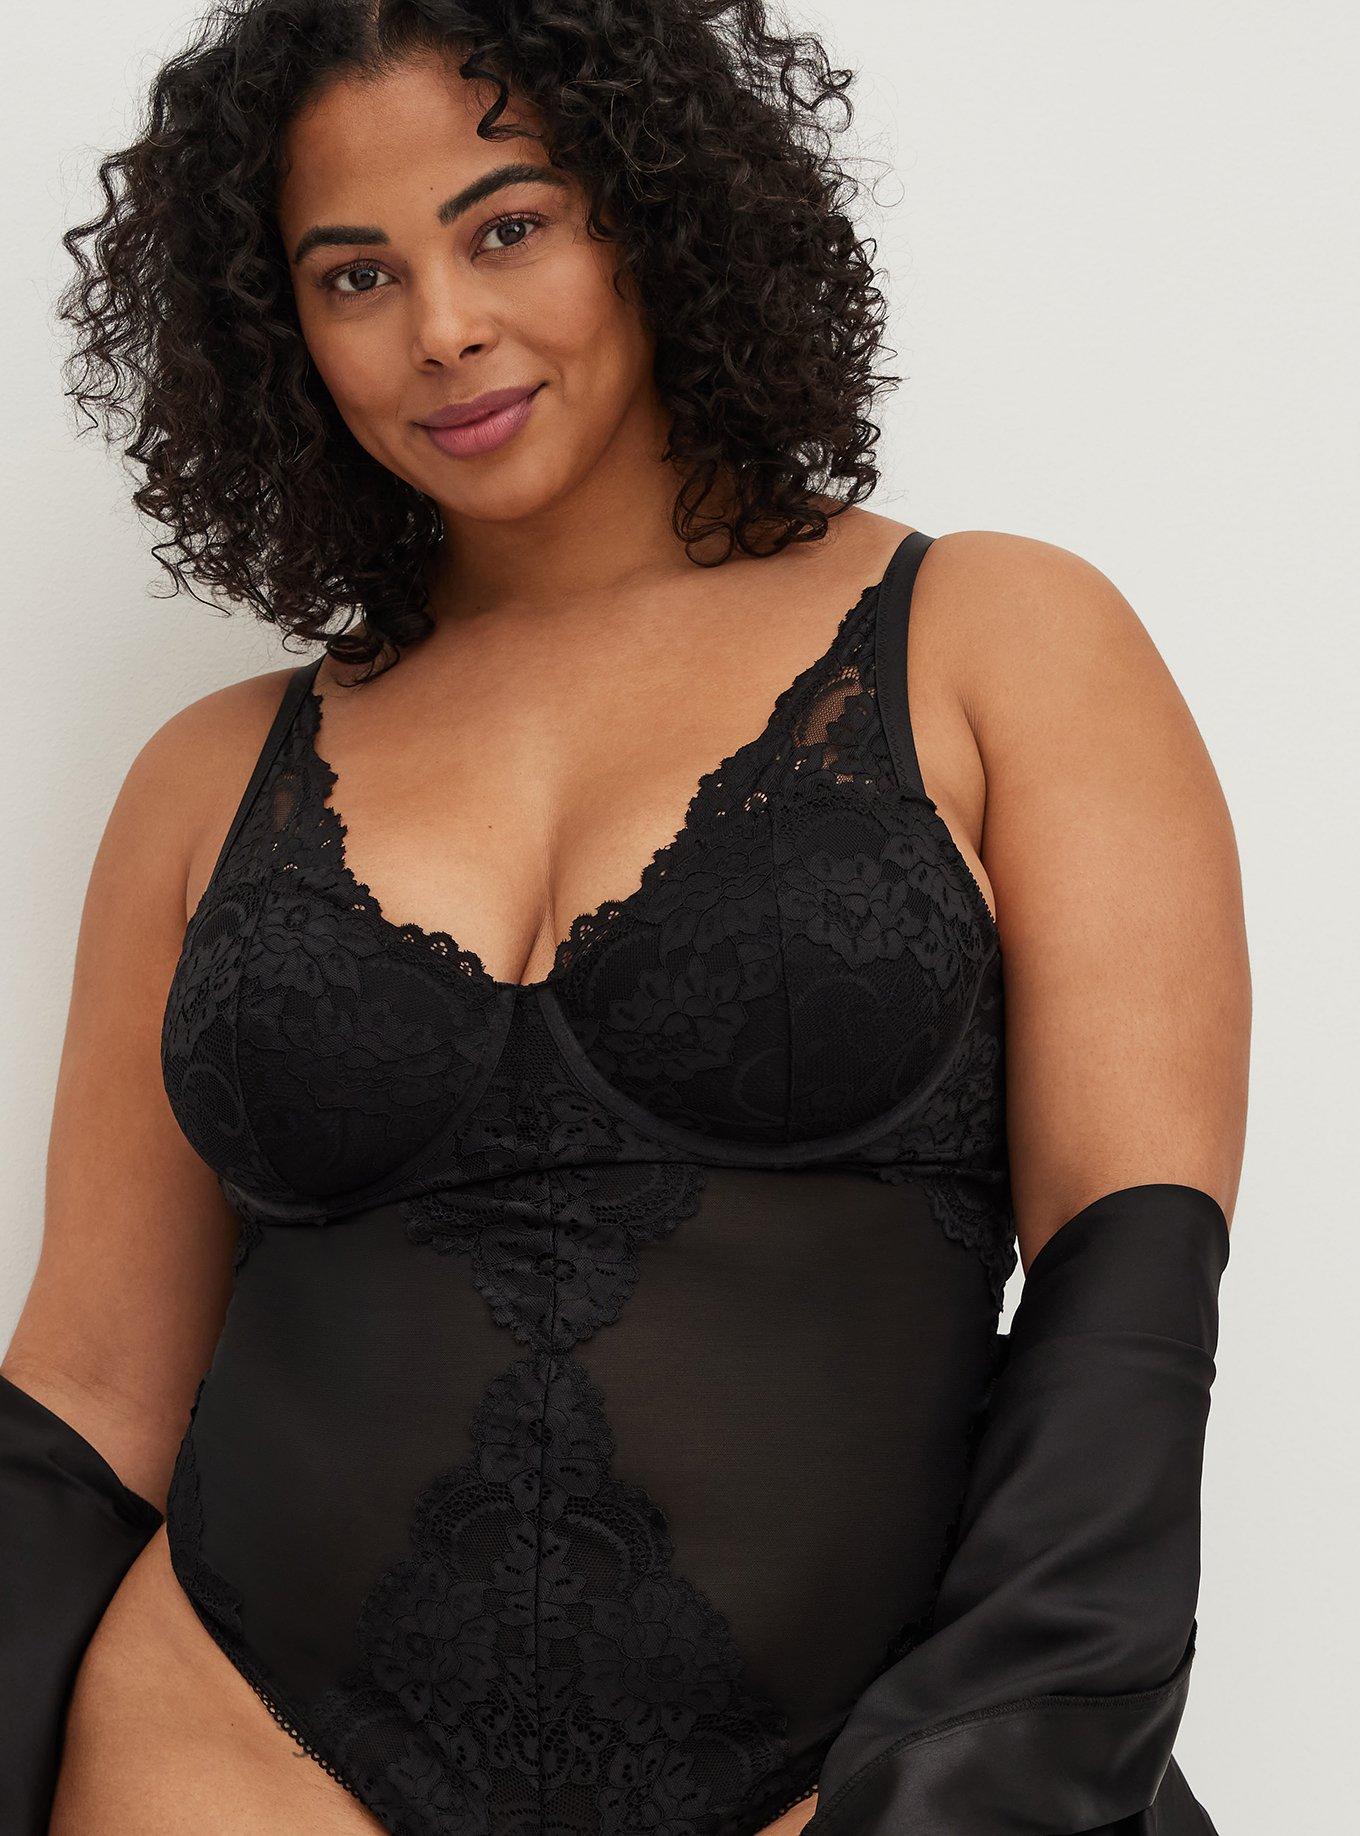 Socialite Women's Size XL Thong Black Bodysuit Strapless Sleeveless Zipper